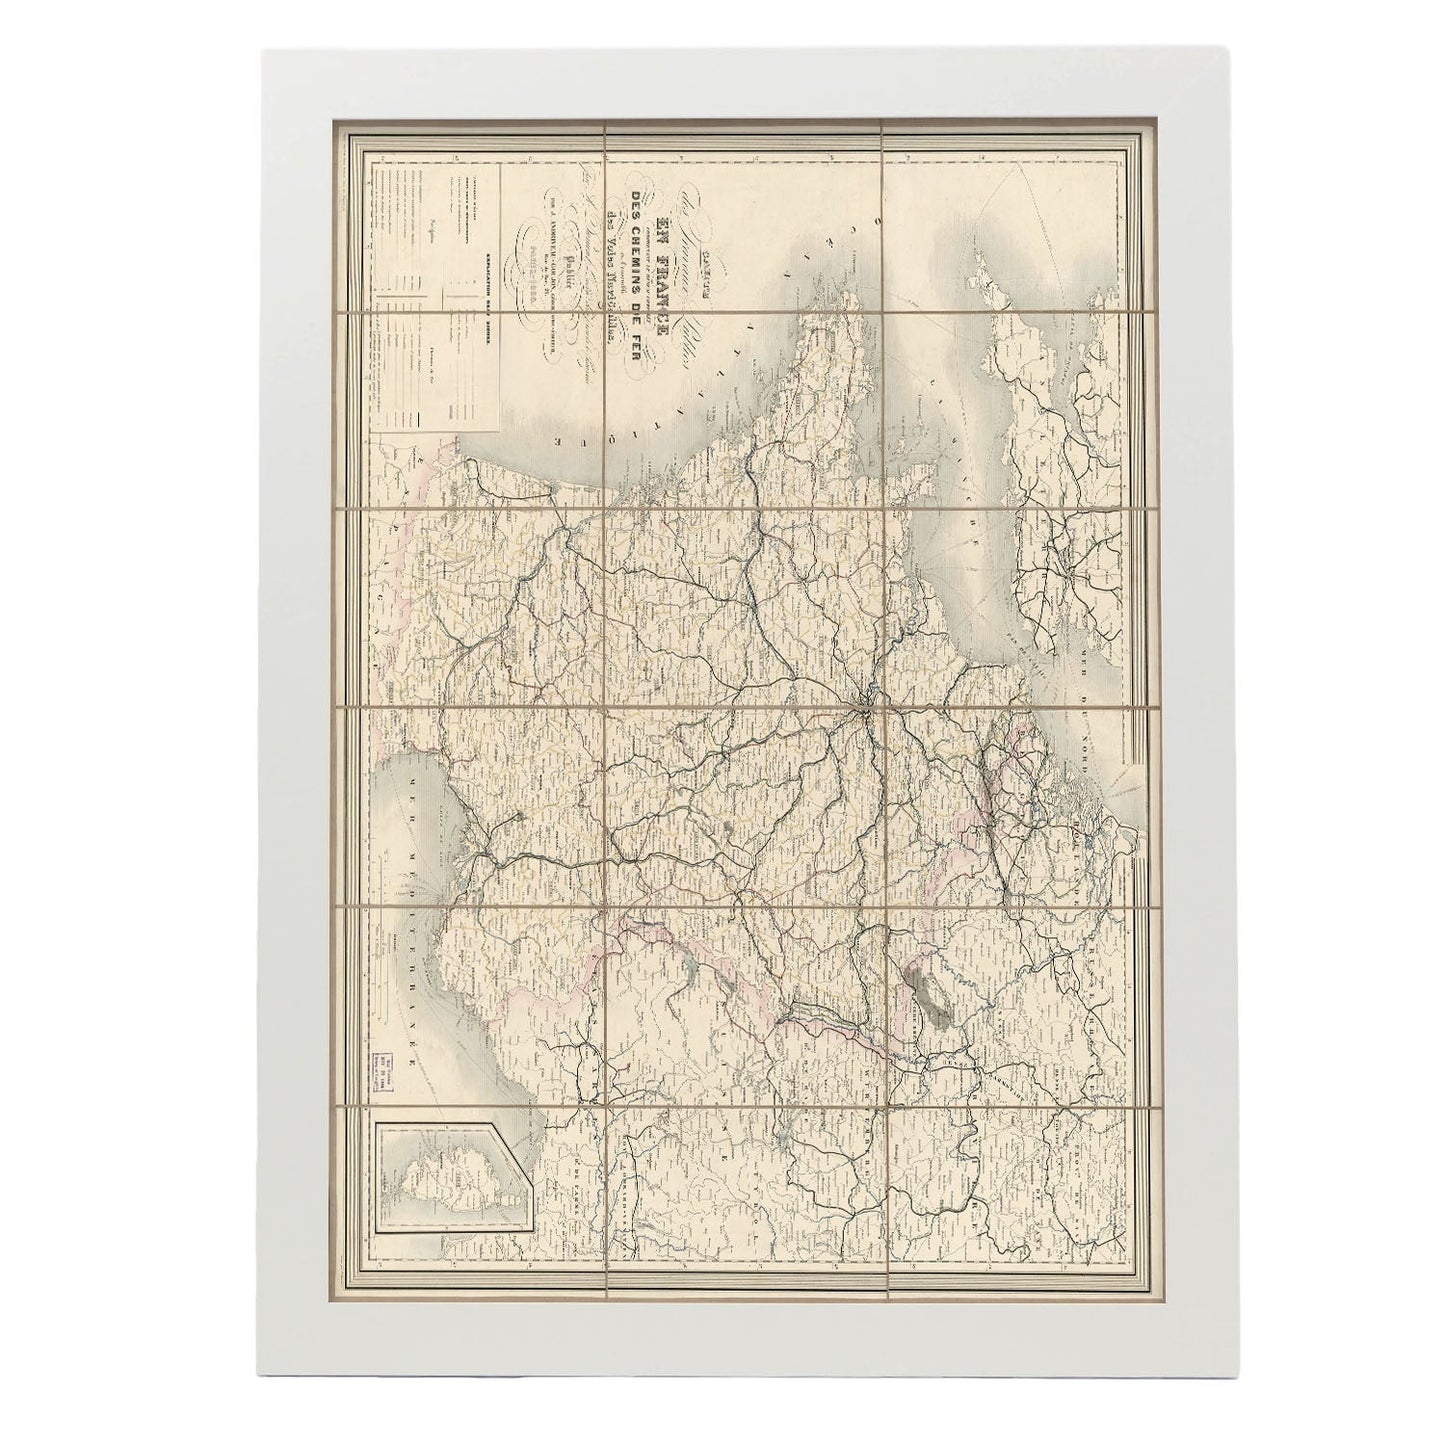 Carte des travaux publics en France 1865-Artwork-Nacnic-A3-Marco Blanco-Nacnic Estudio SL